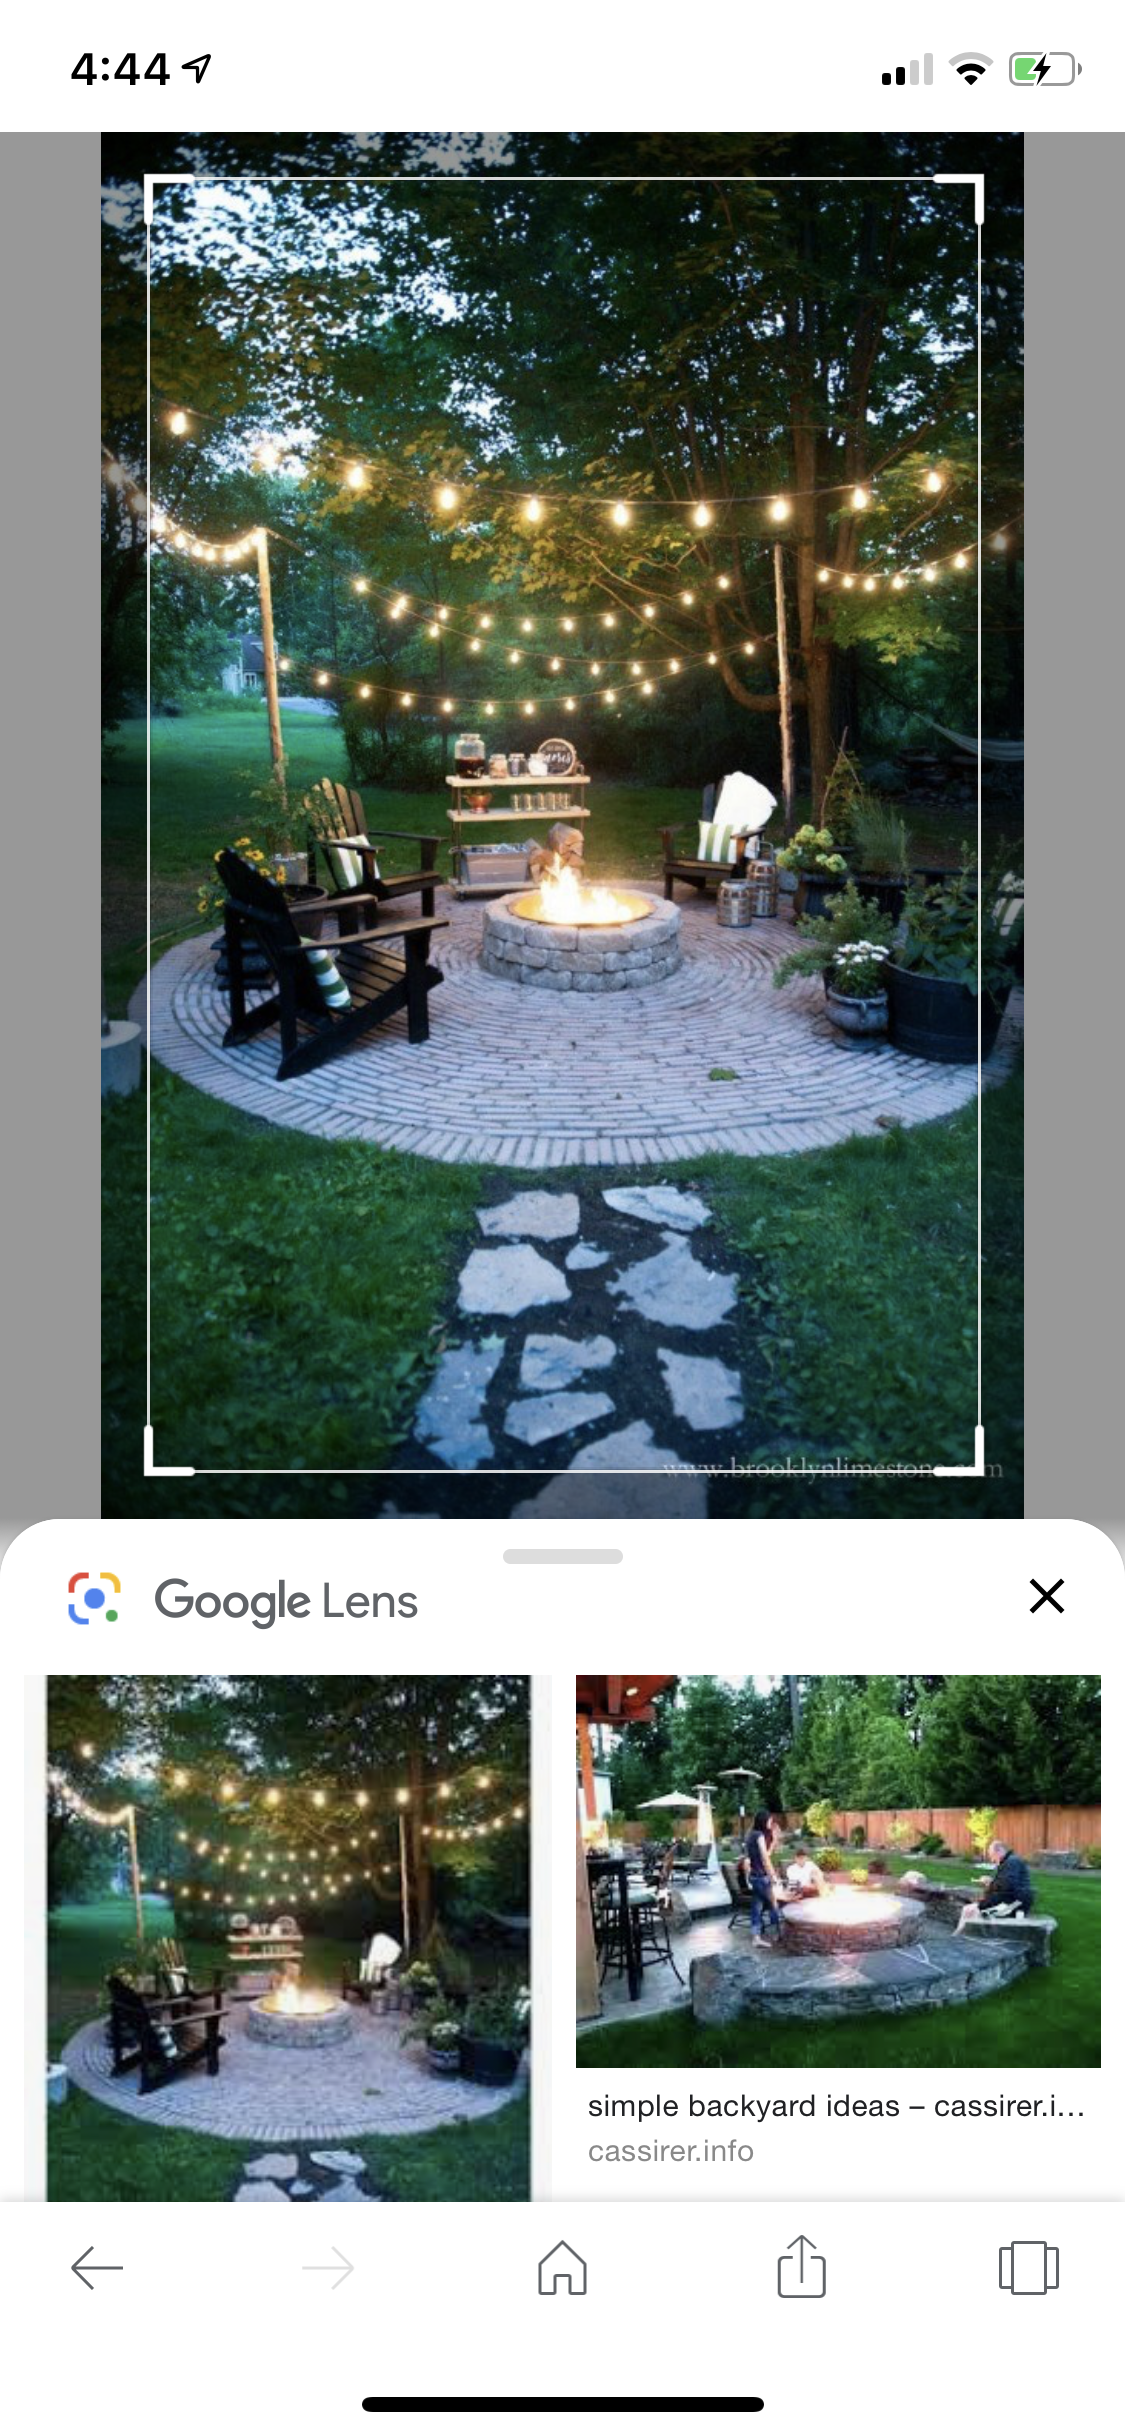 Google Image Search - Google Lens